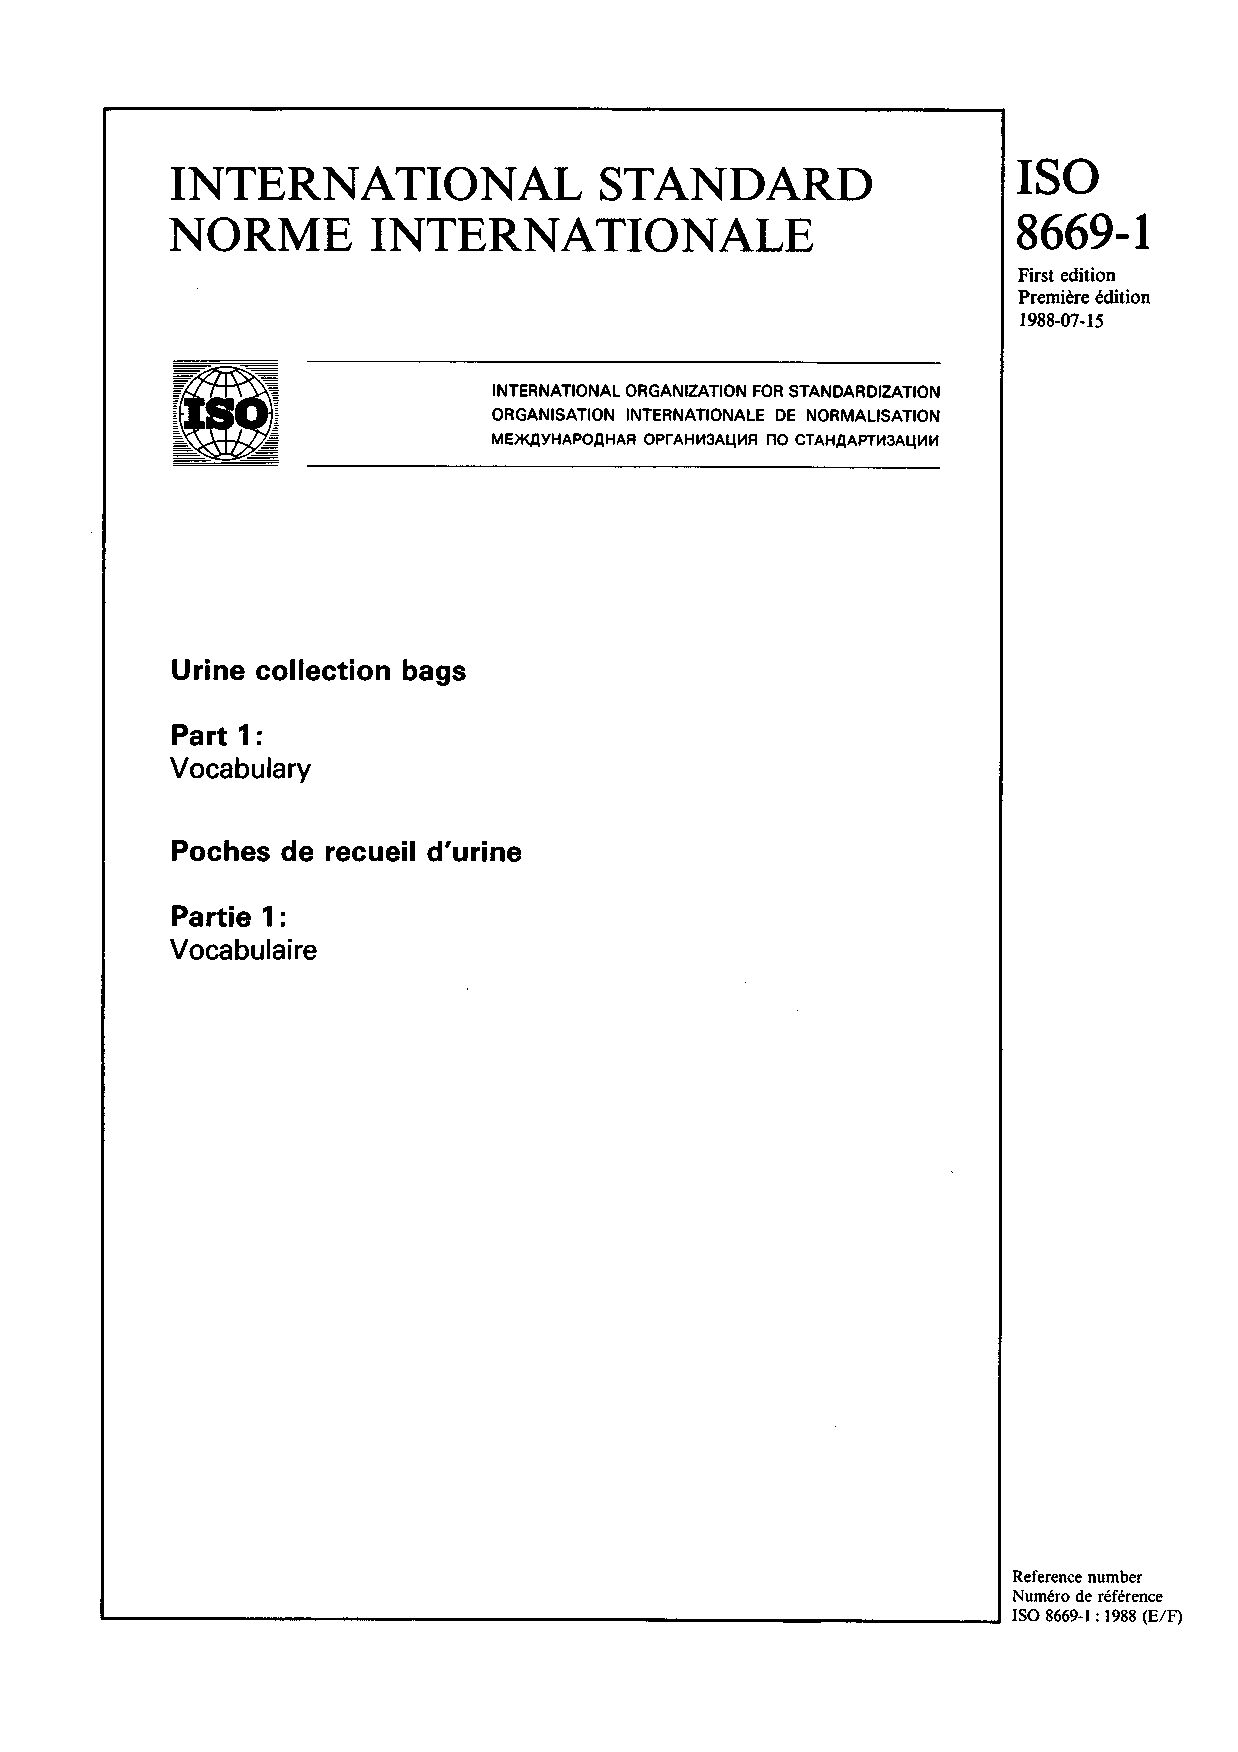 ISO 8669-1:1988封面图